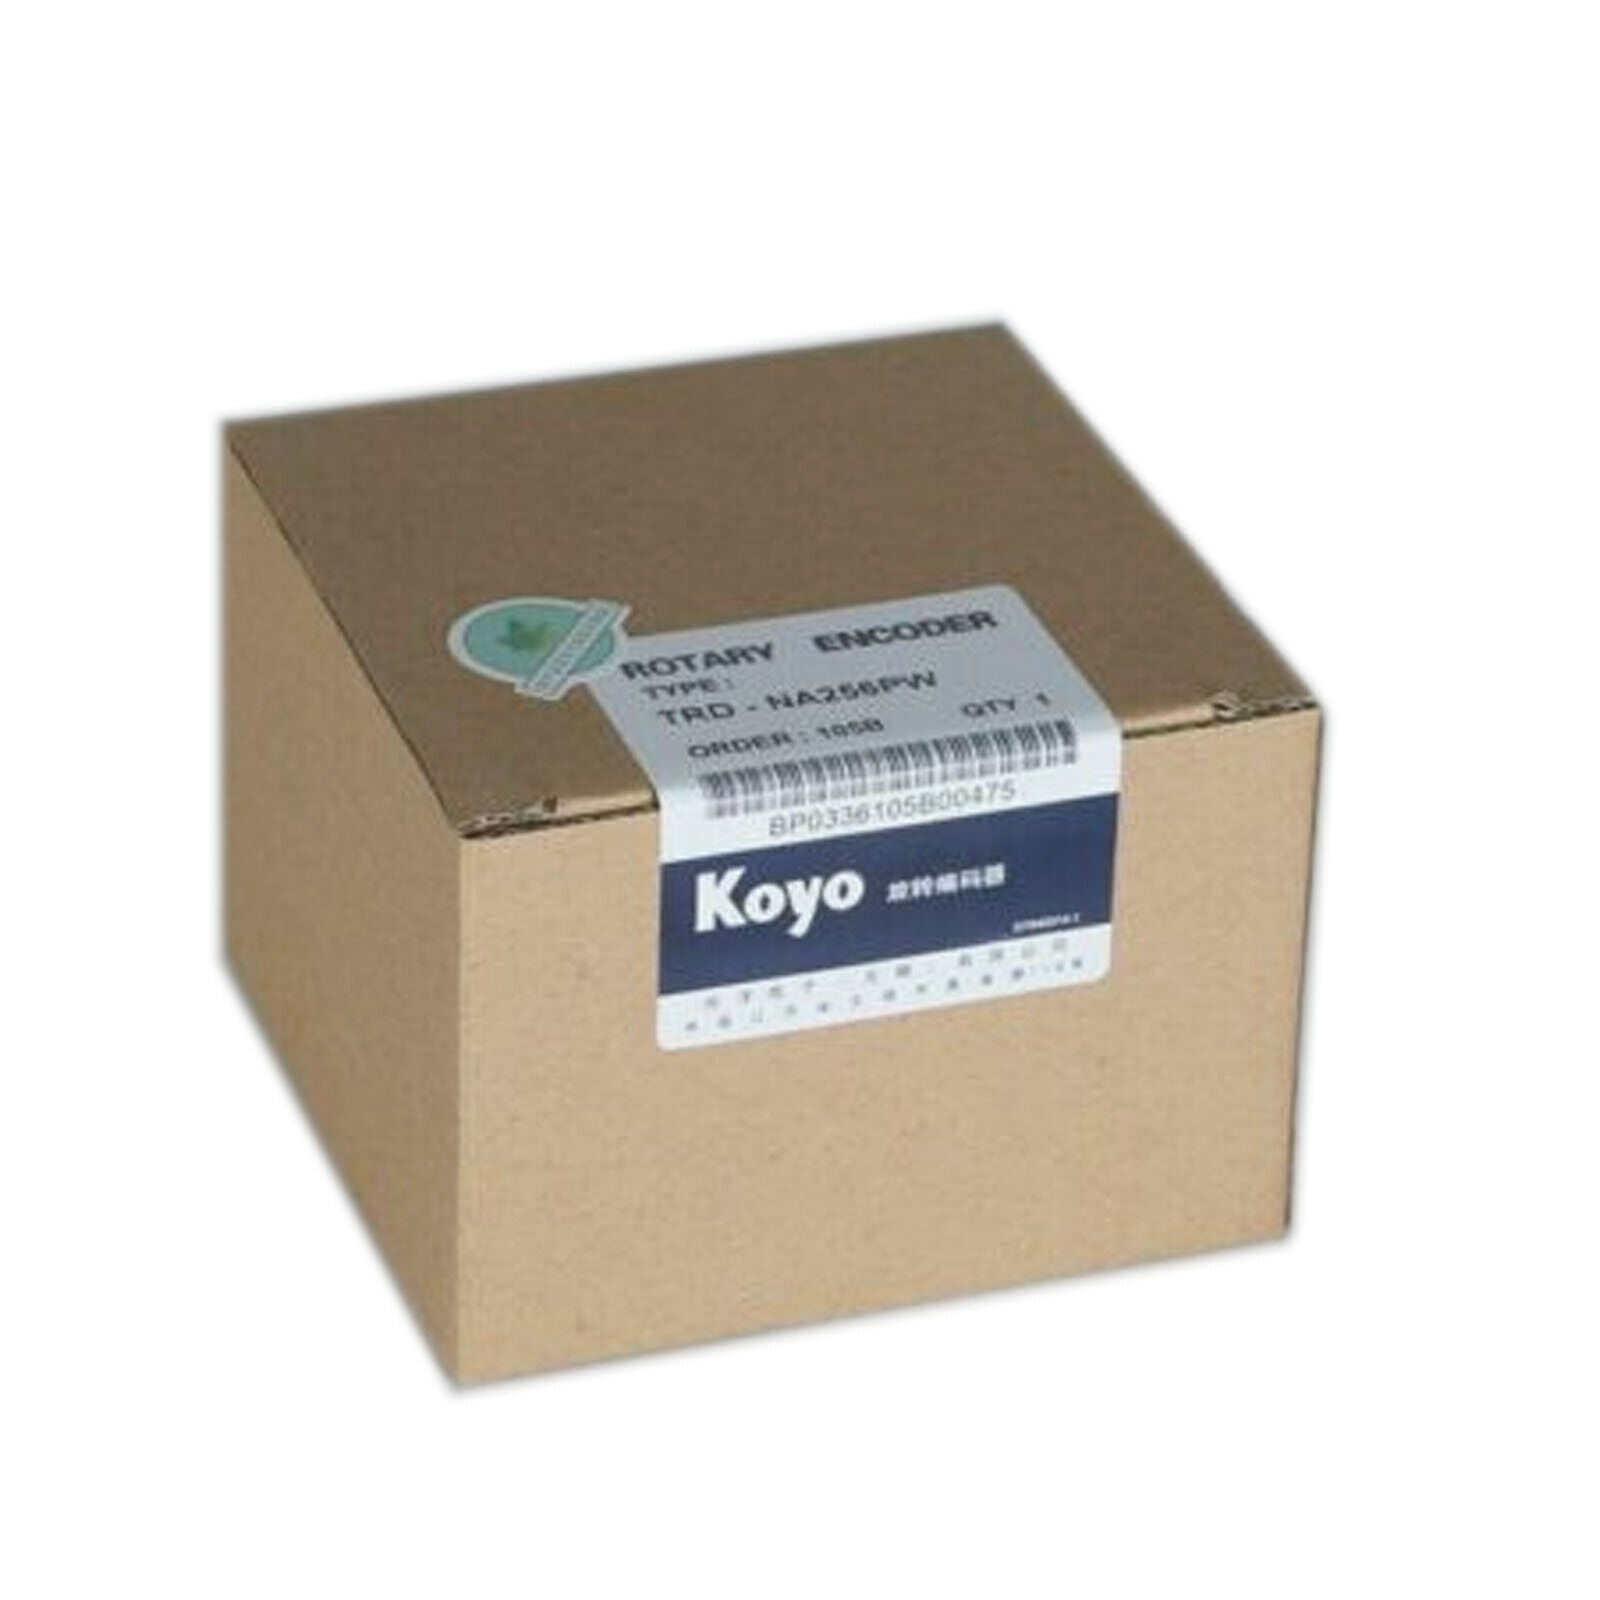 new  In Box KOYO TRD-NA256PW TRDNA256PW Rotary Encoder